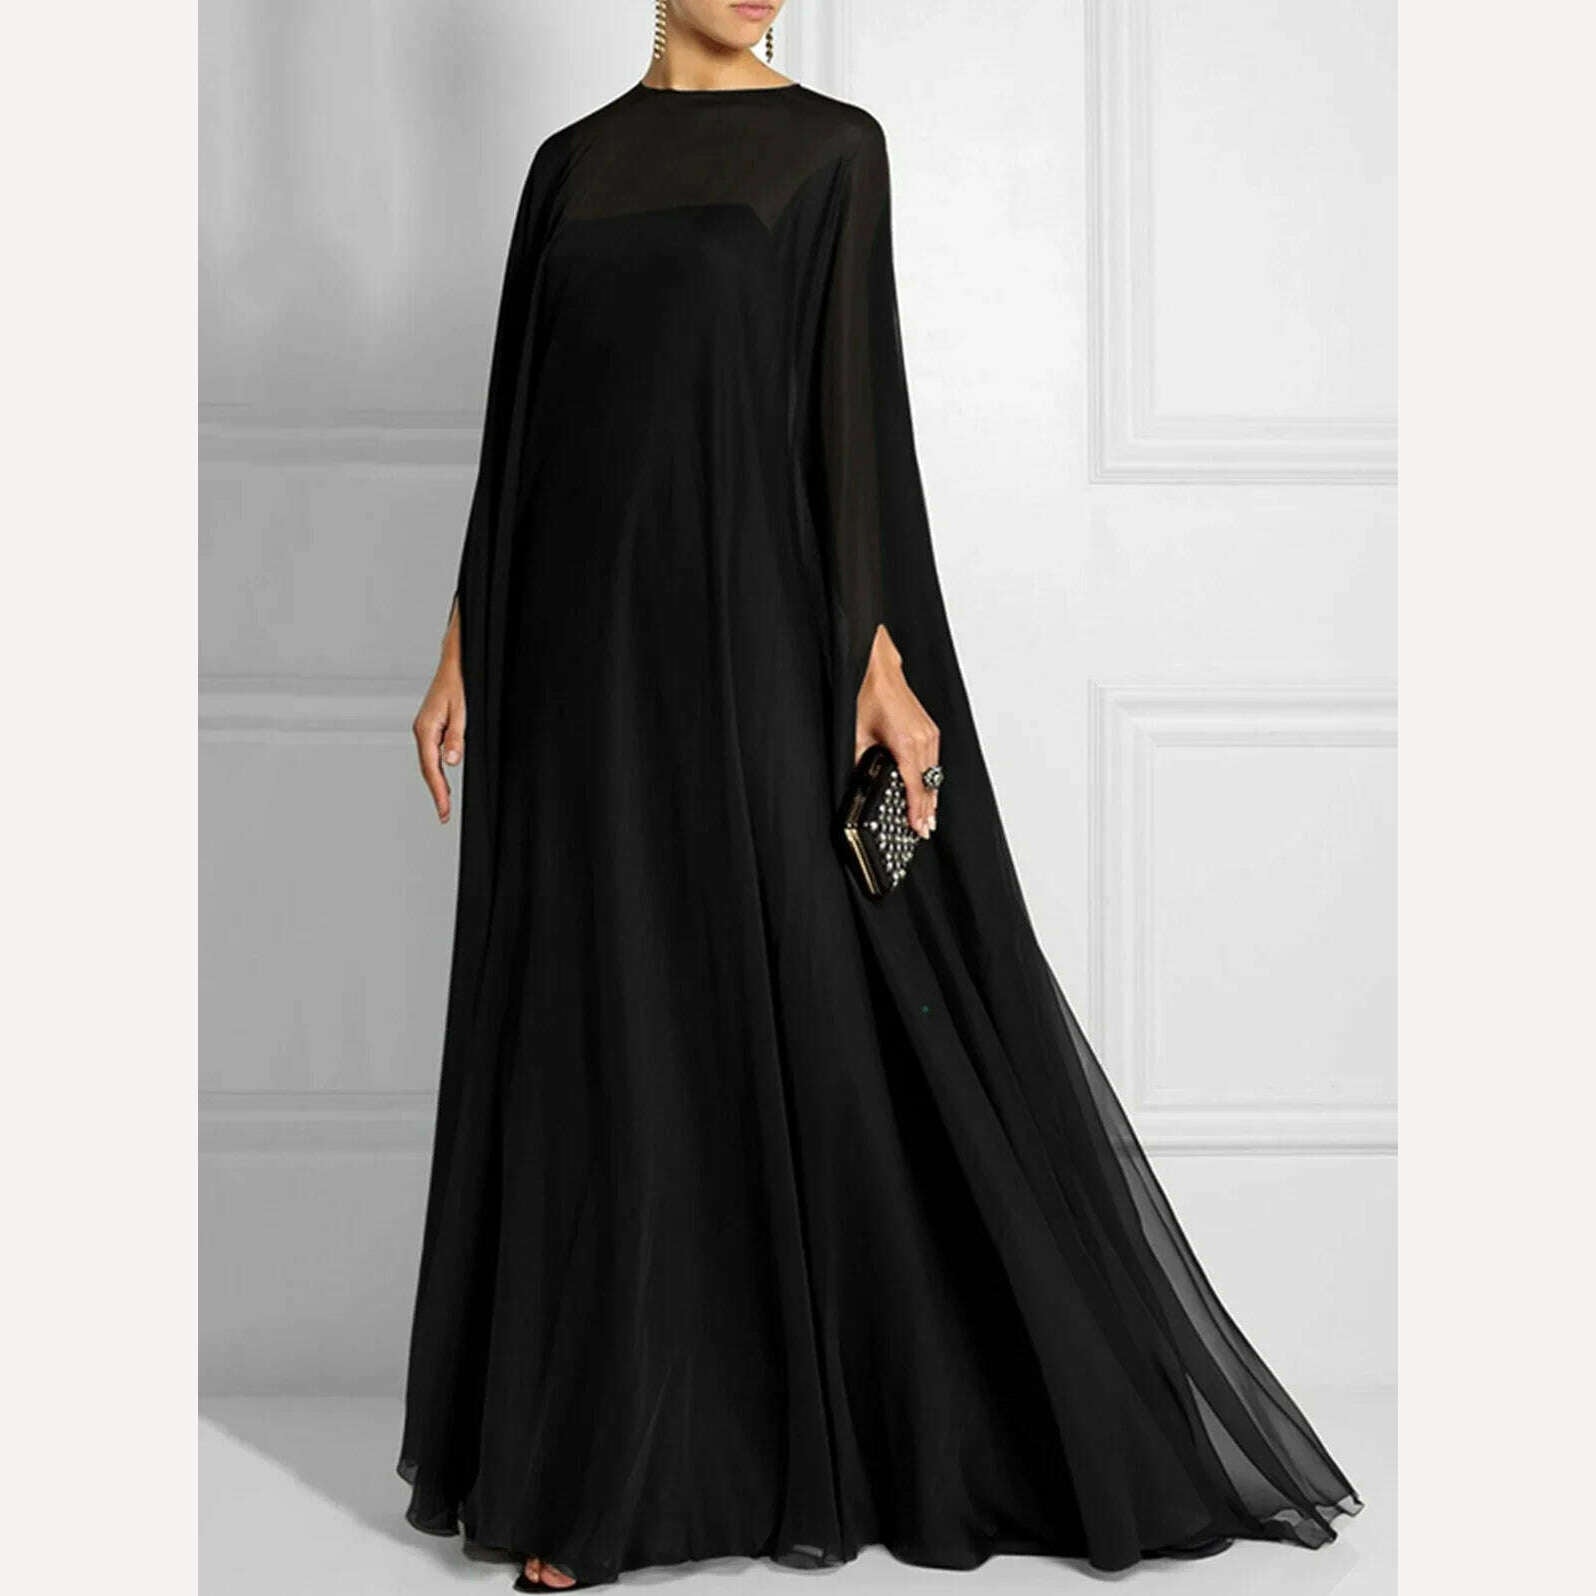 KIMLUD, Spring Summer Fashion Dress Solid Color Shawl Evening Gown Long Maxi Dresses for Women Dolman Sleeve Floor-length Flowy Dress, KIMLUD Womens Clothes